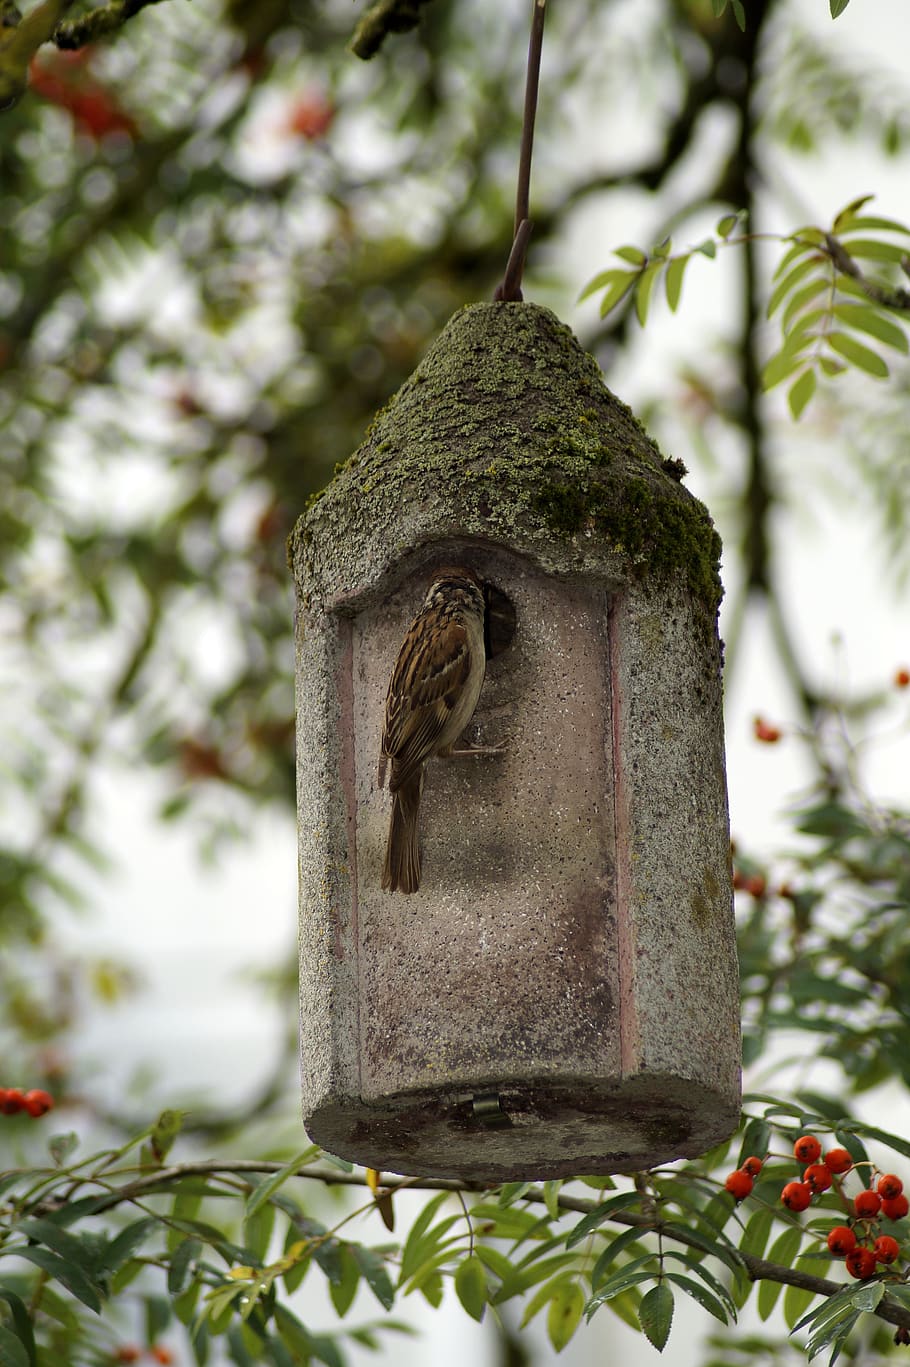 sparrow, bird, bird feeder, aviary, rowan, nesting box, incubator, tree, leaves, branch